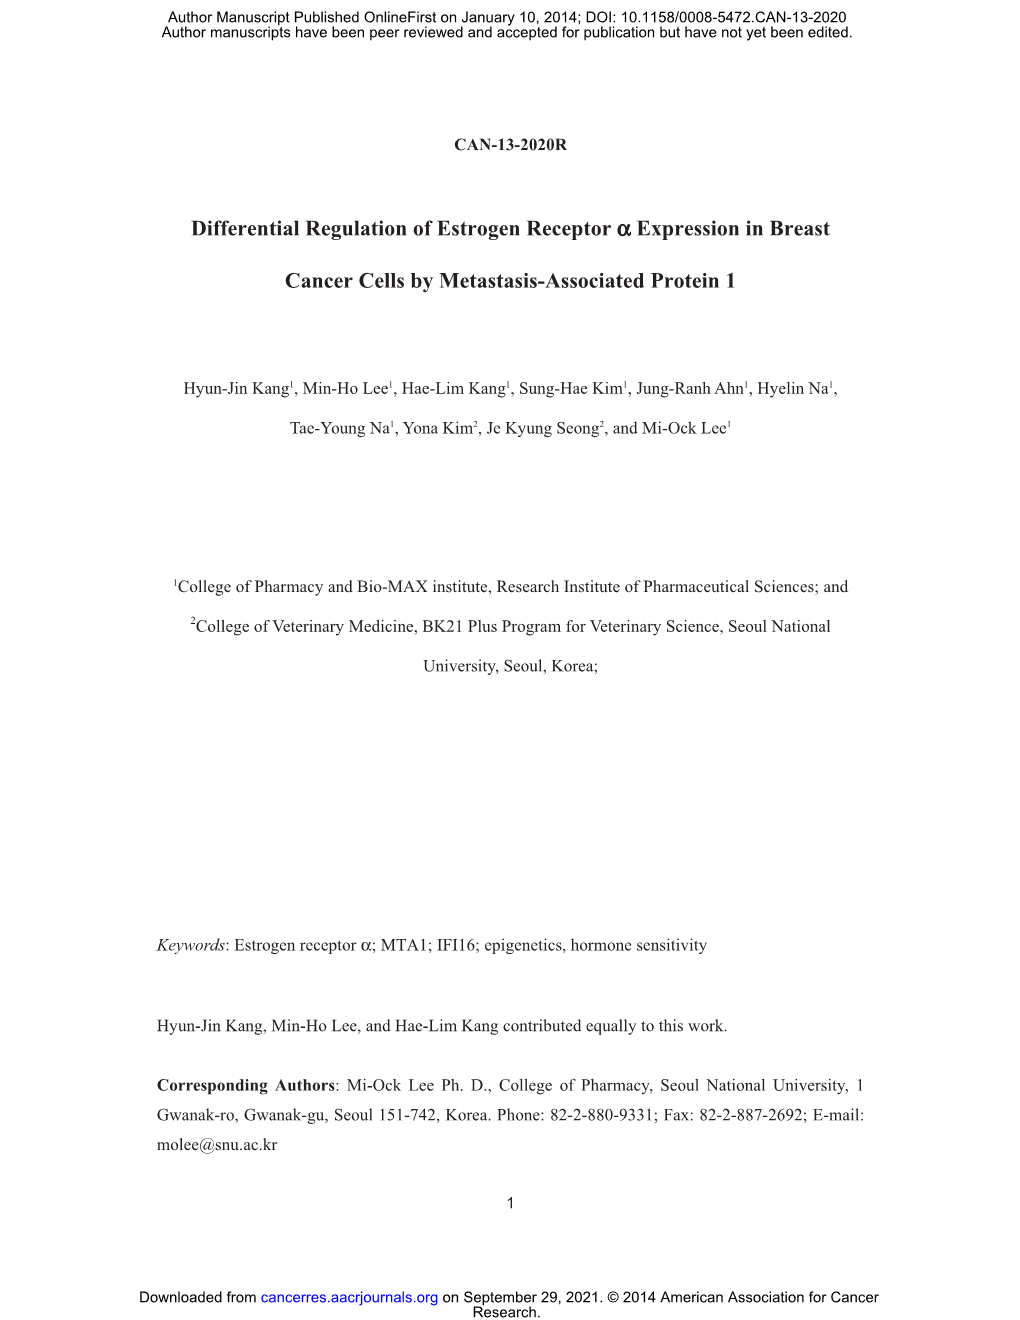 Differential Regulation of Estrogen Receptor Α Expression in Breast